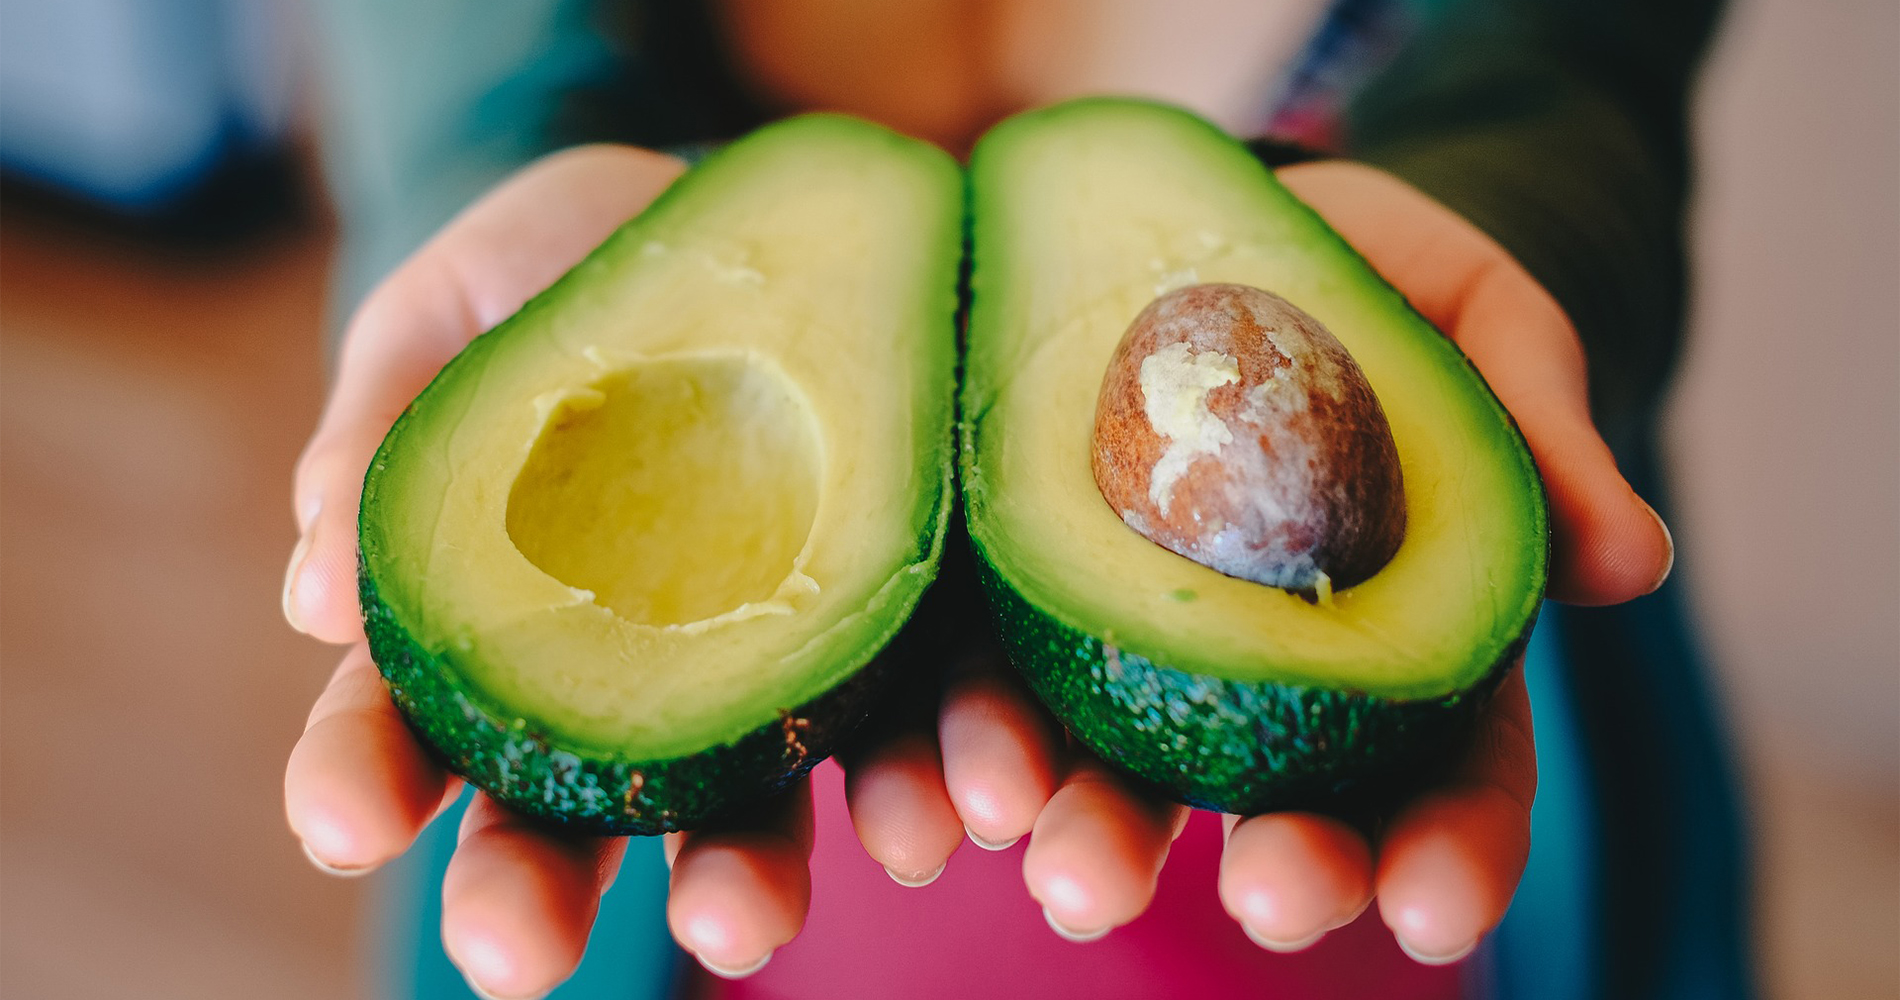 Benefits of avocados